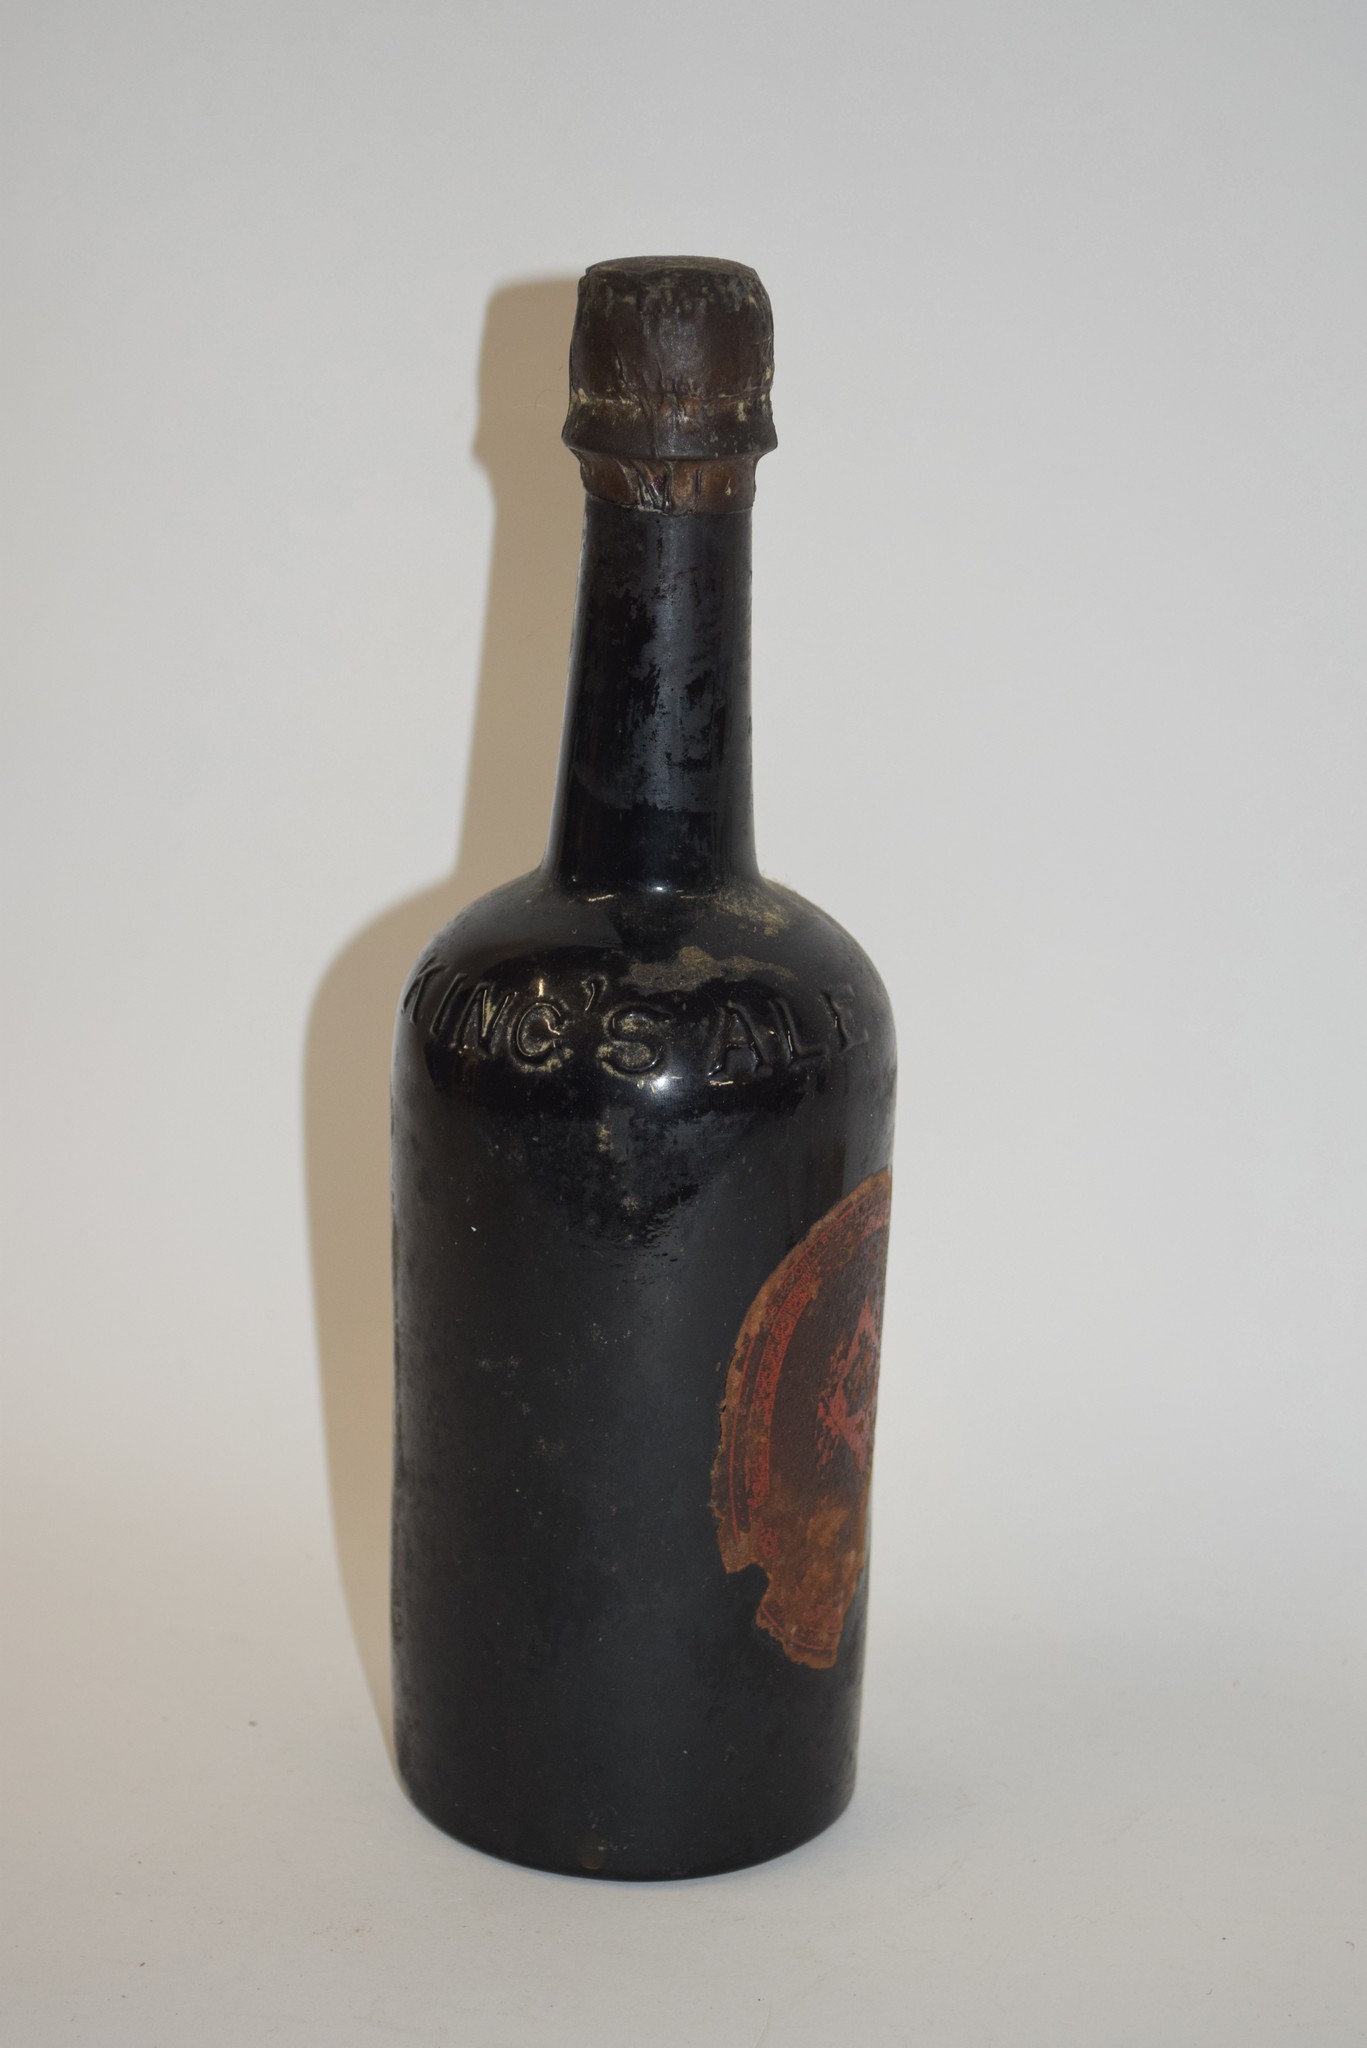 Vintage bottle of Kings Ale